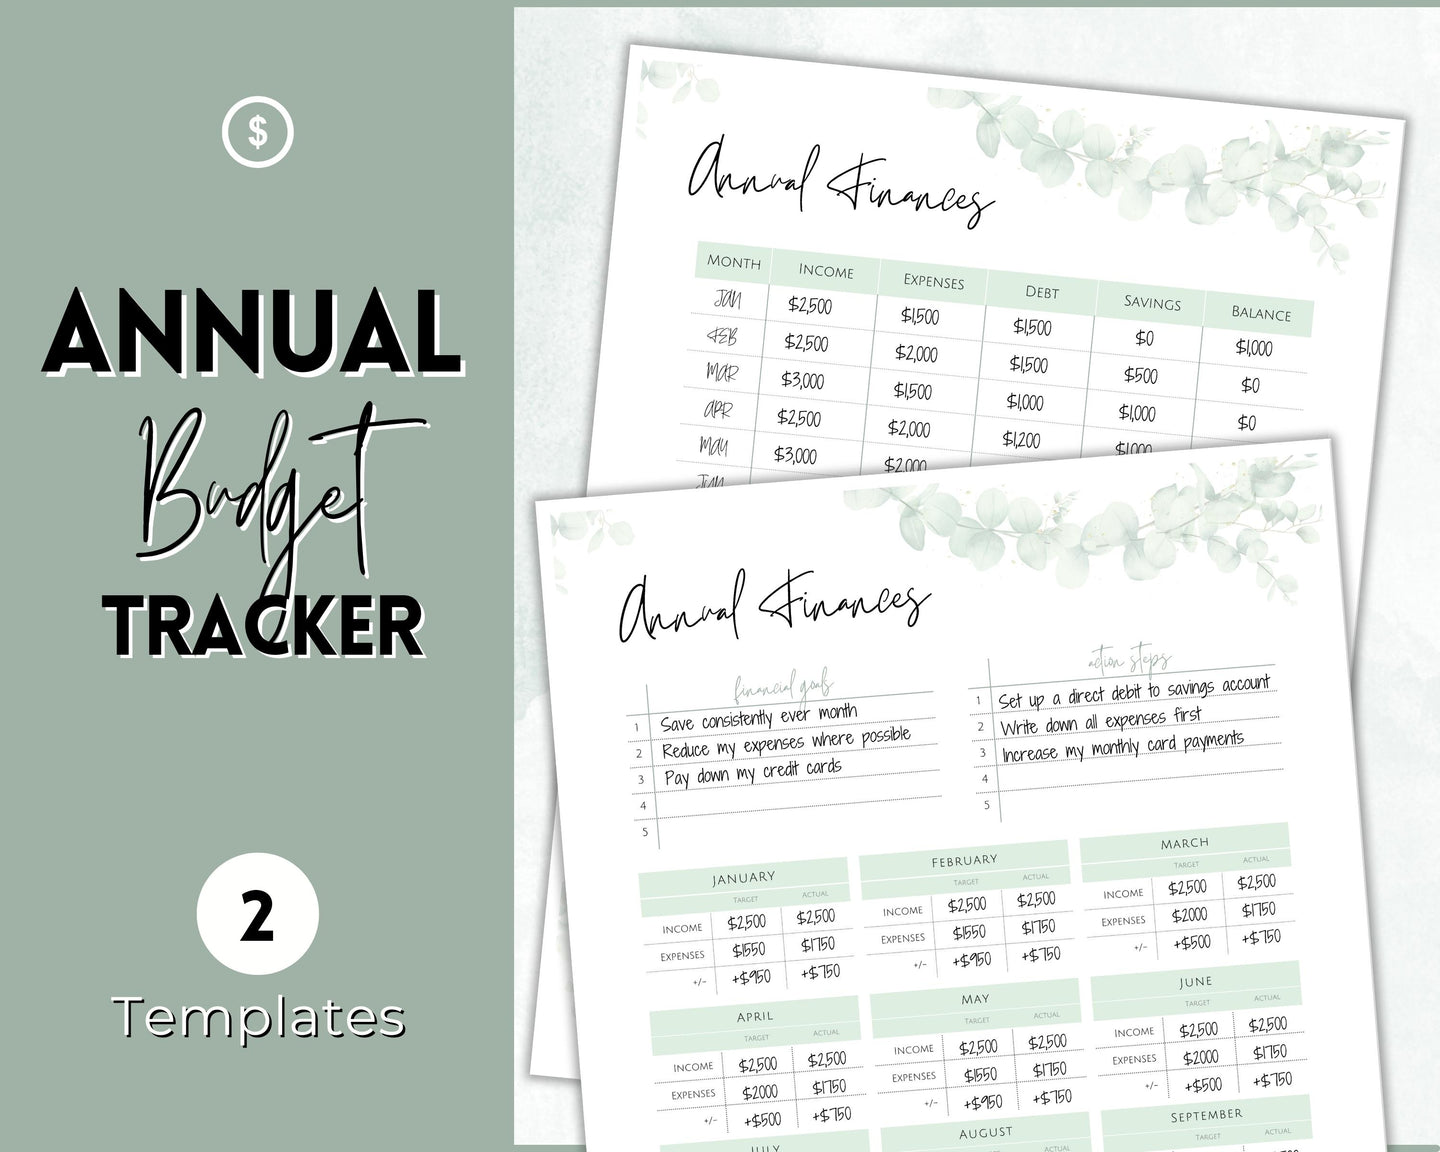 Annual Budget Tracker | Bill, Expenses, Income & Savings Tracker | Green Eucalyptus